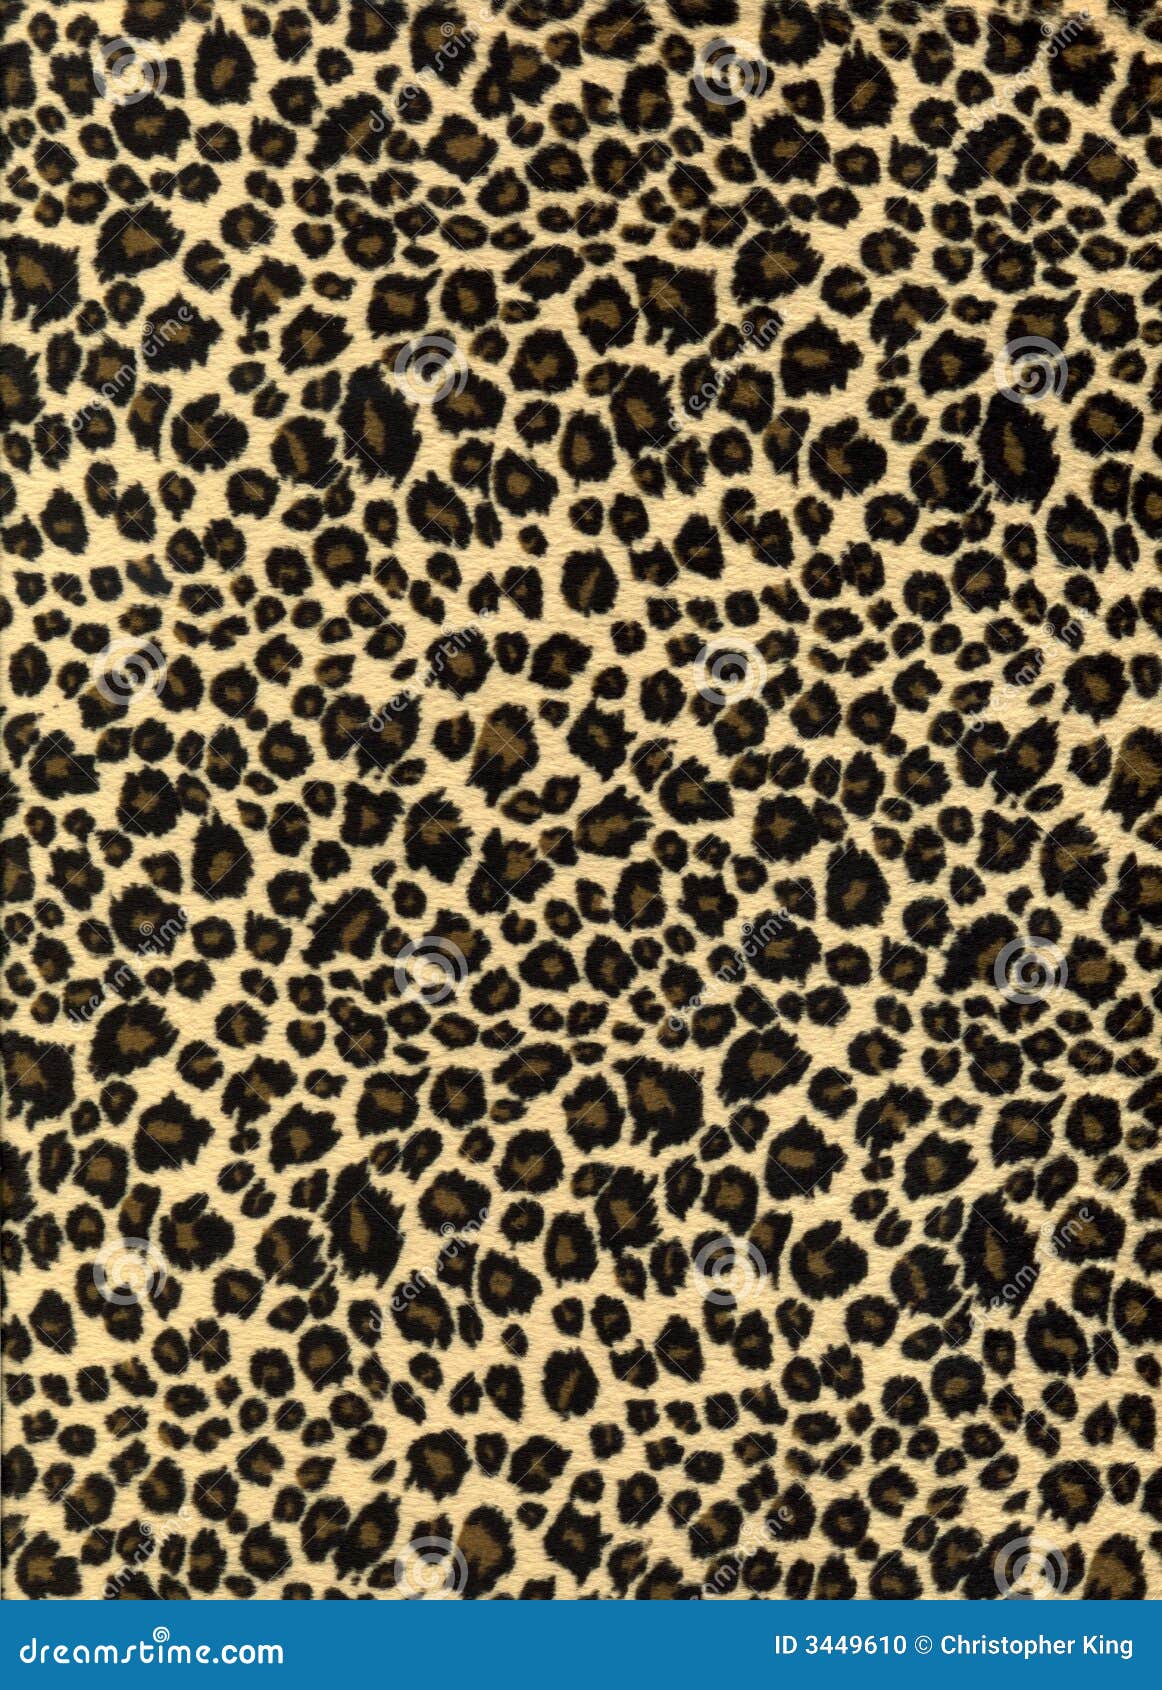 leopard print fabric texture